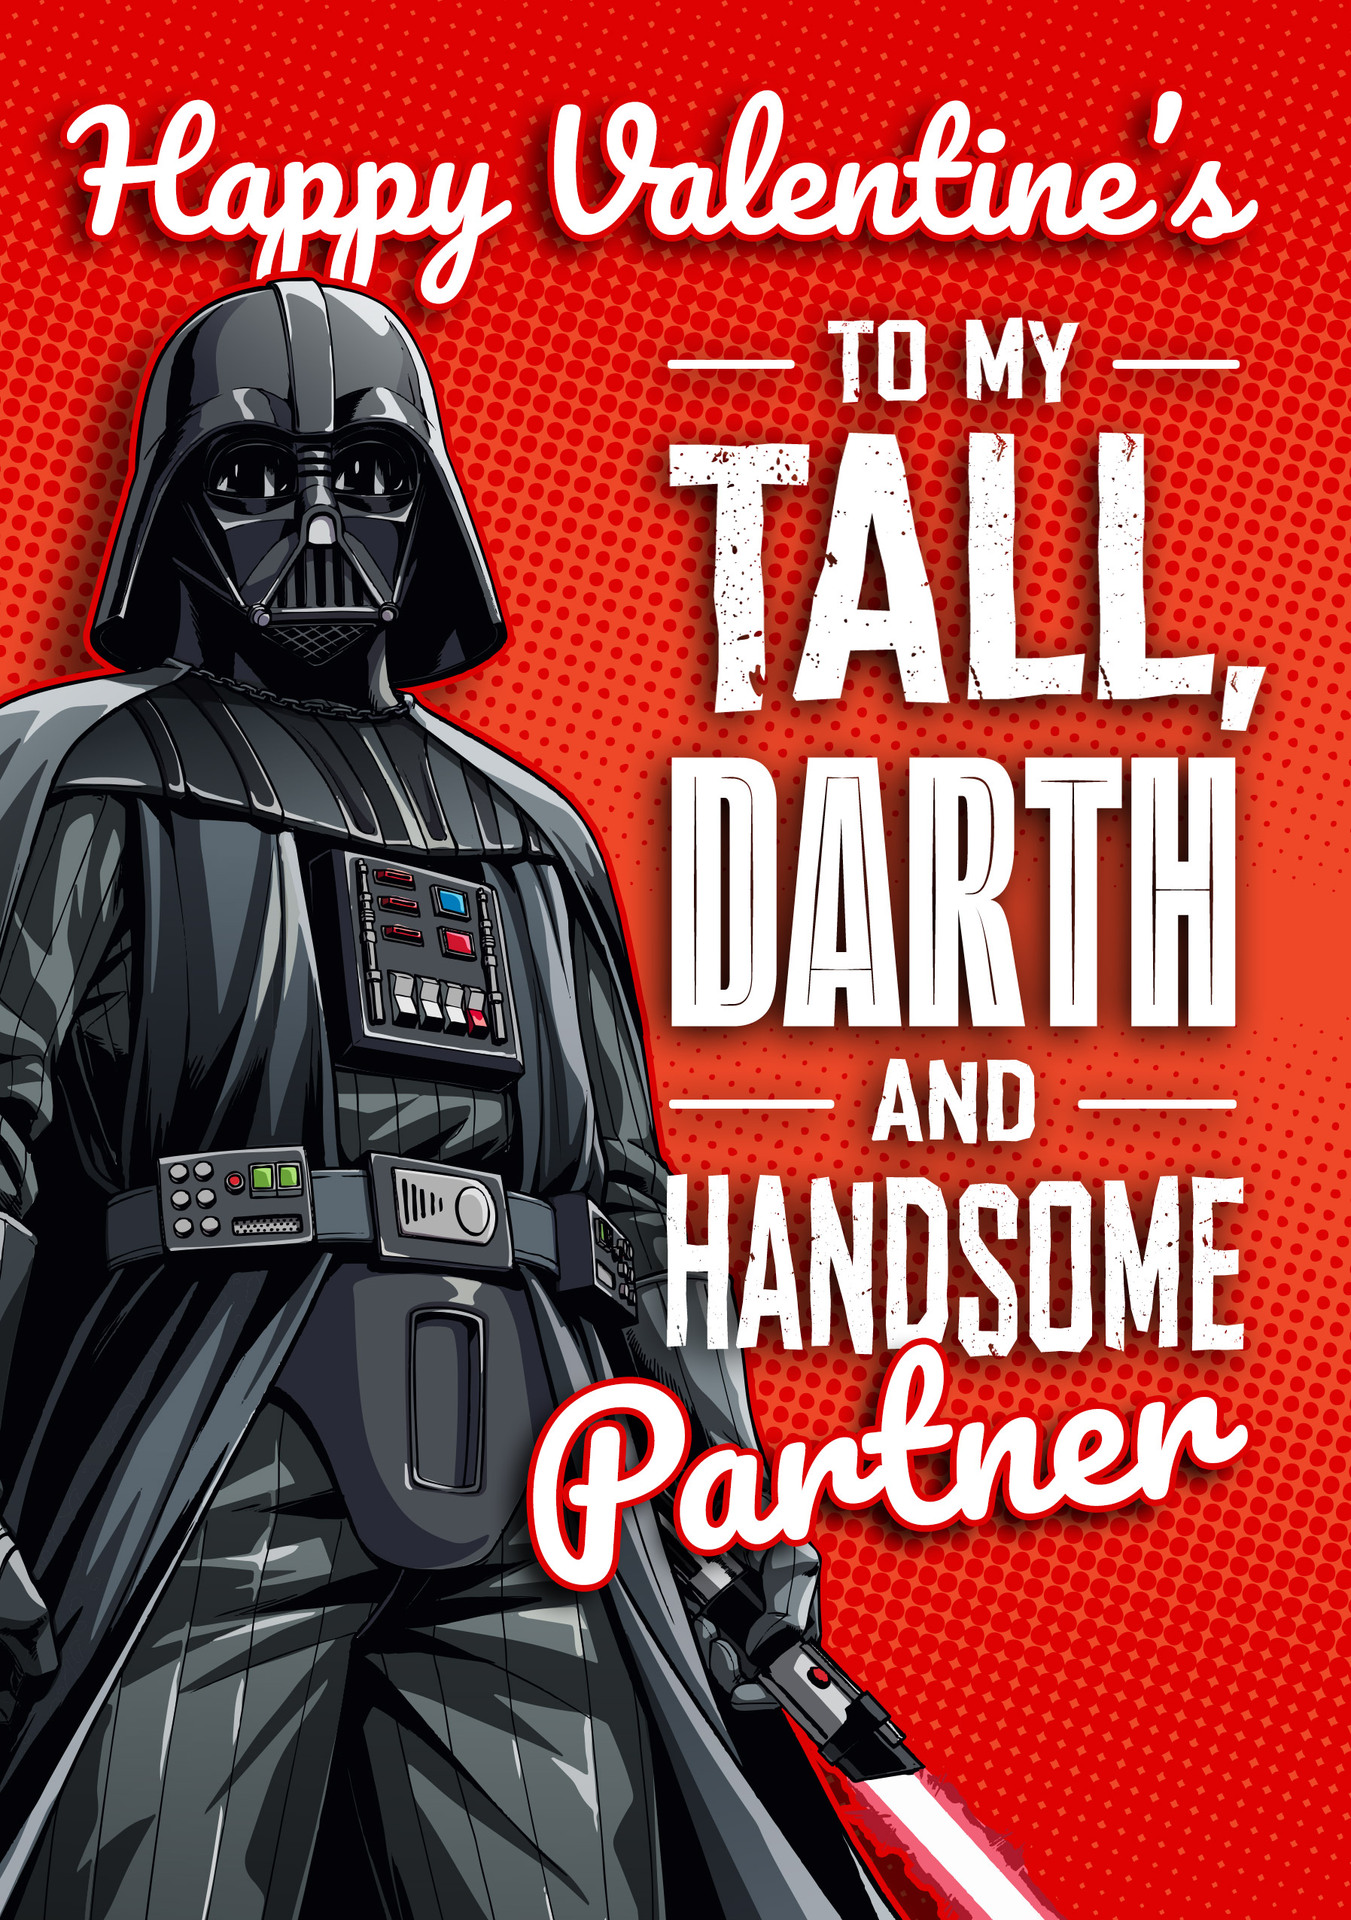 Star Wars Darth Partner Valentines Card